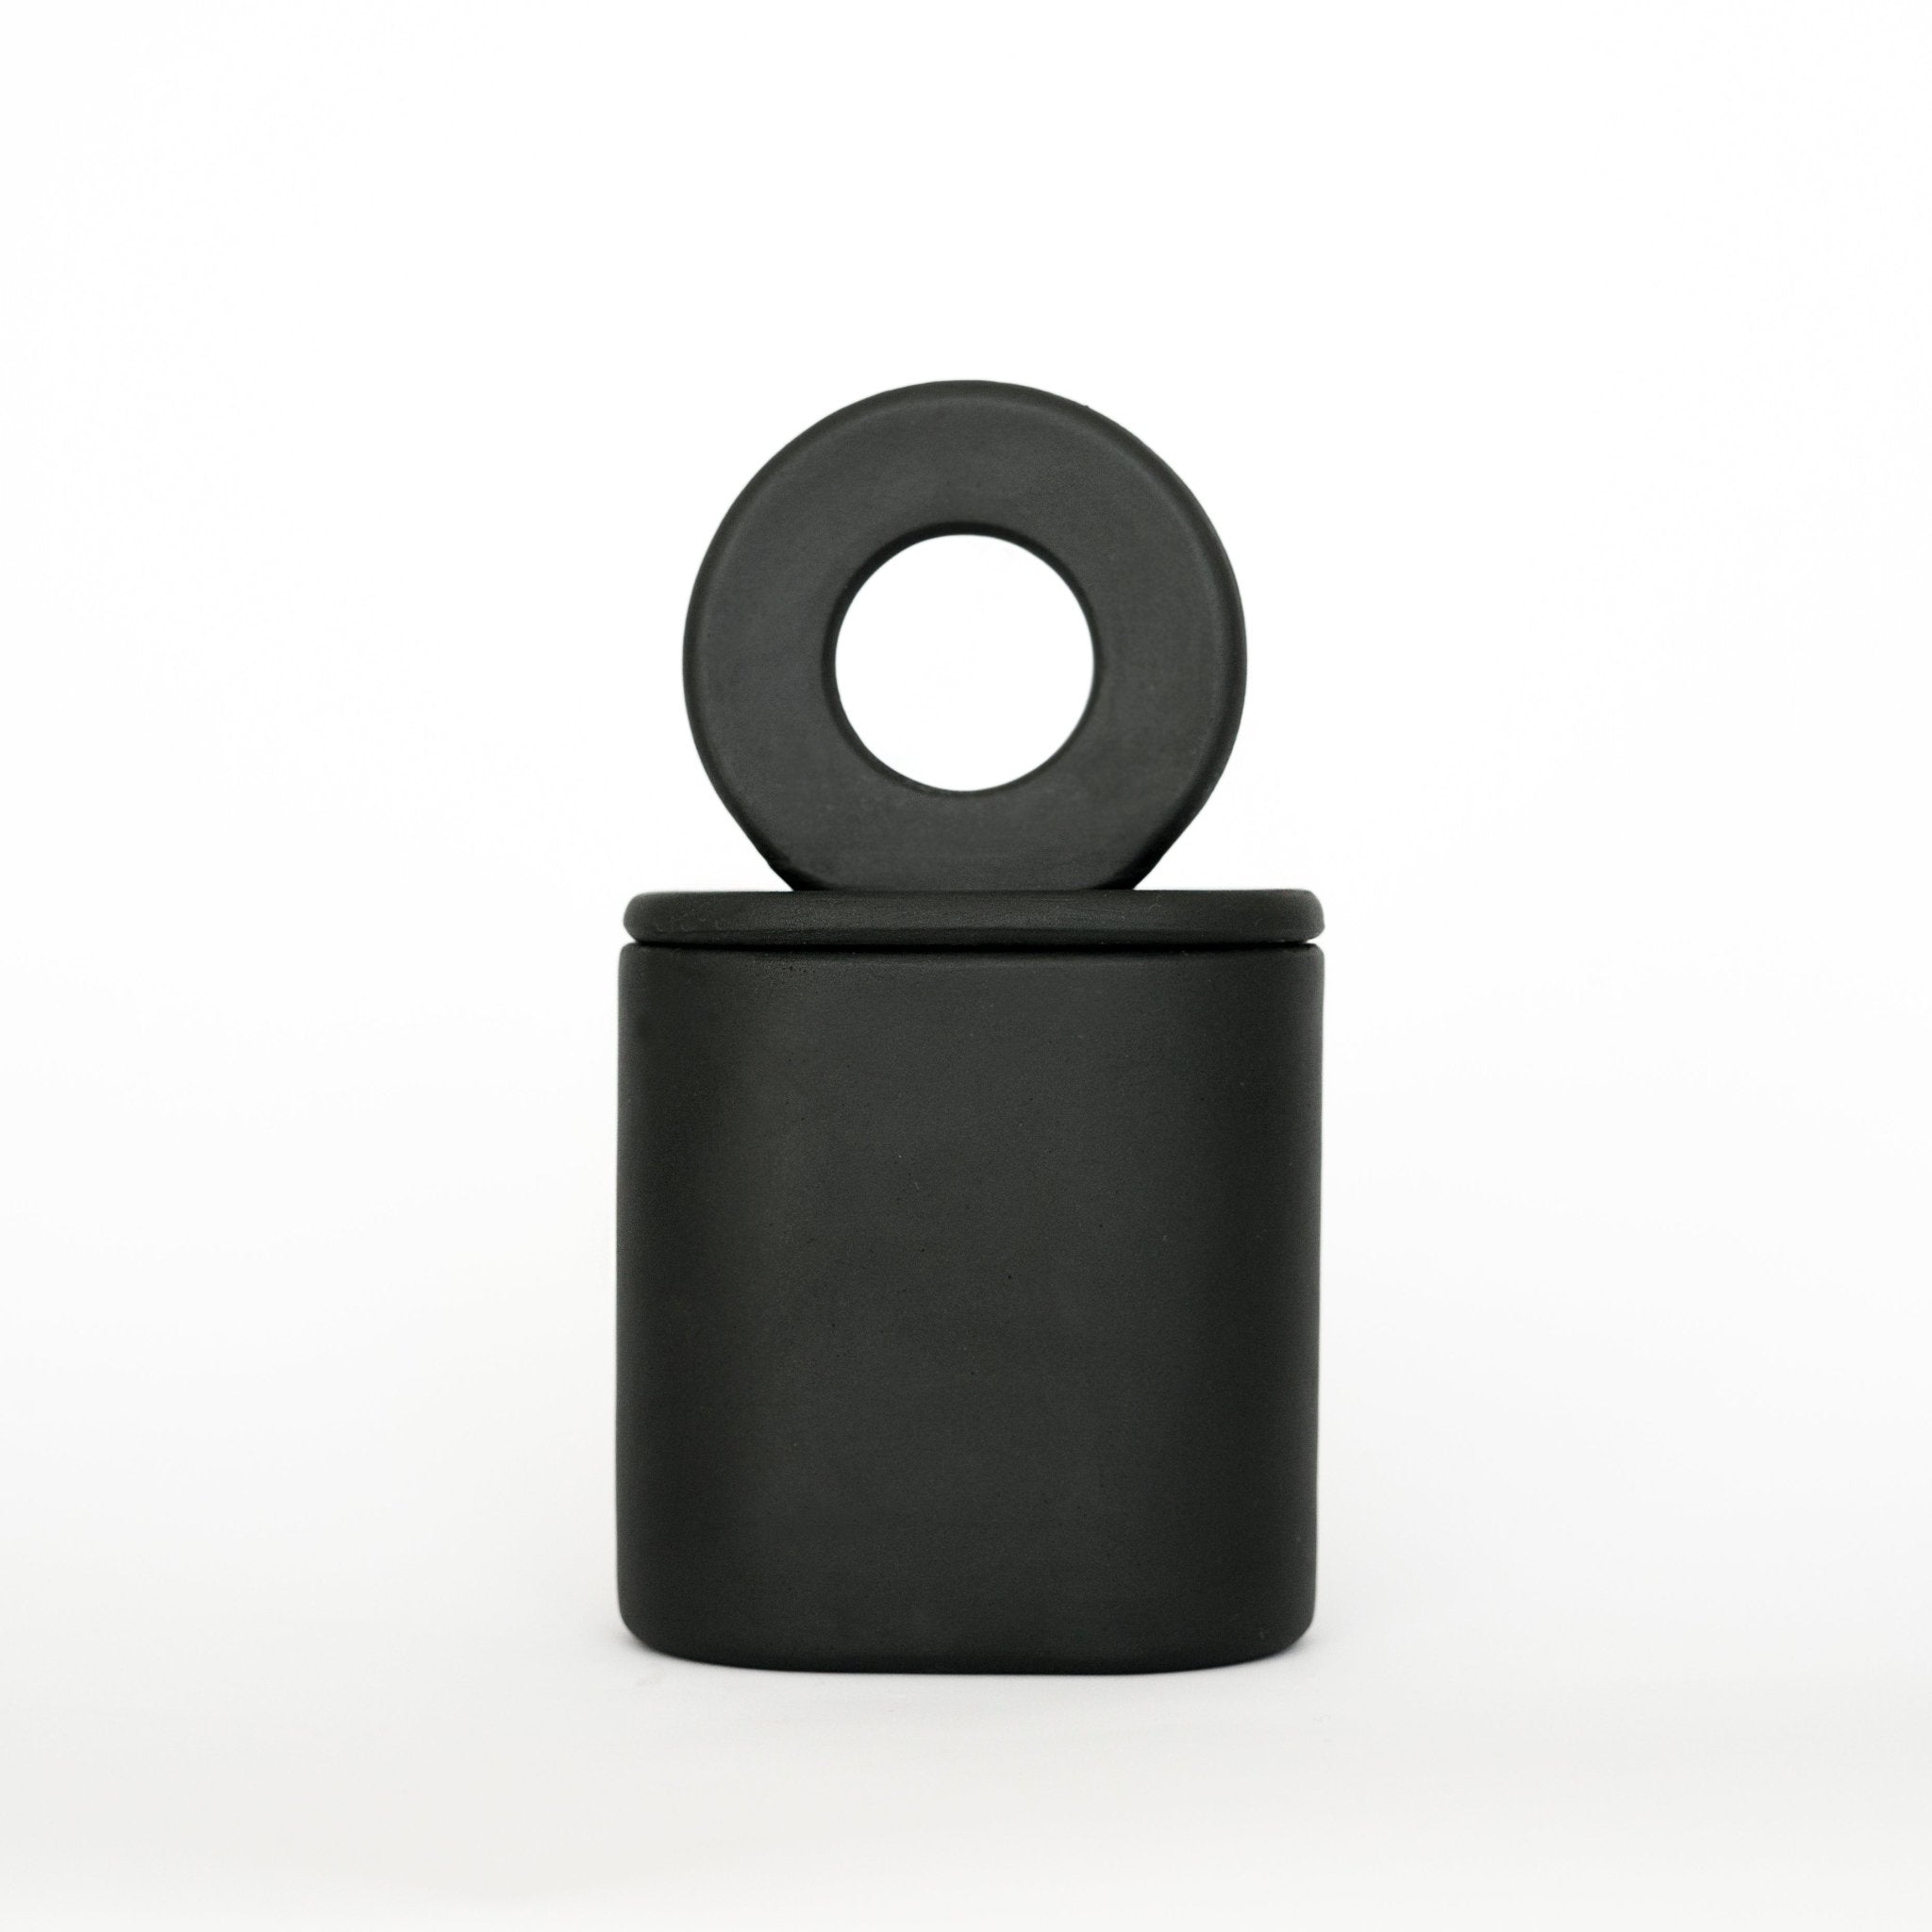 Eclipse Graphite Black - pojemnik z czarnej porcelany - Kyuka Design